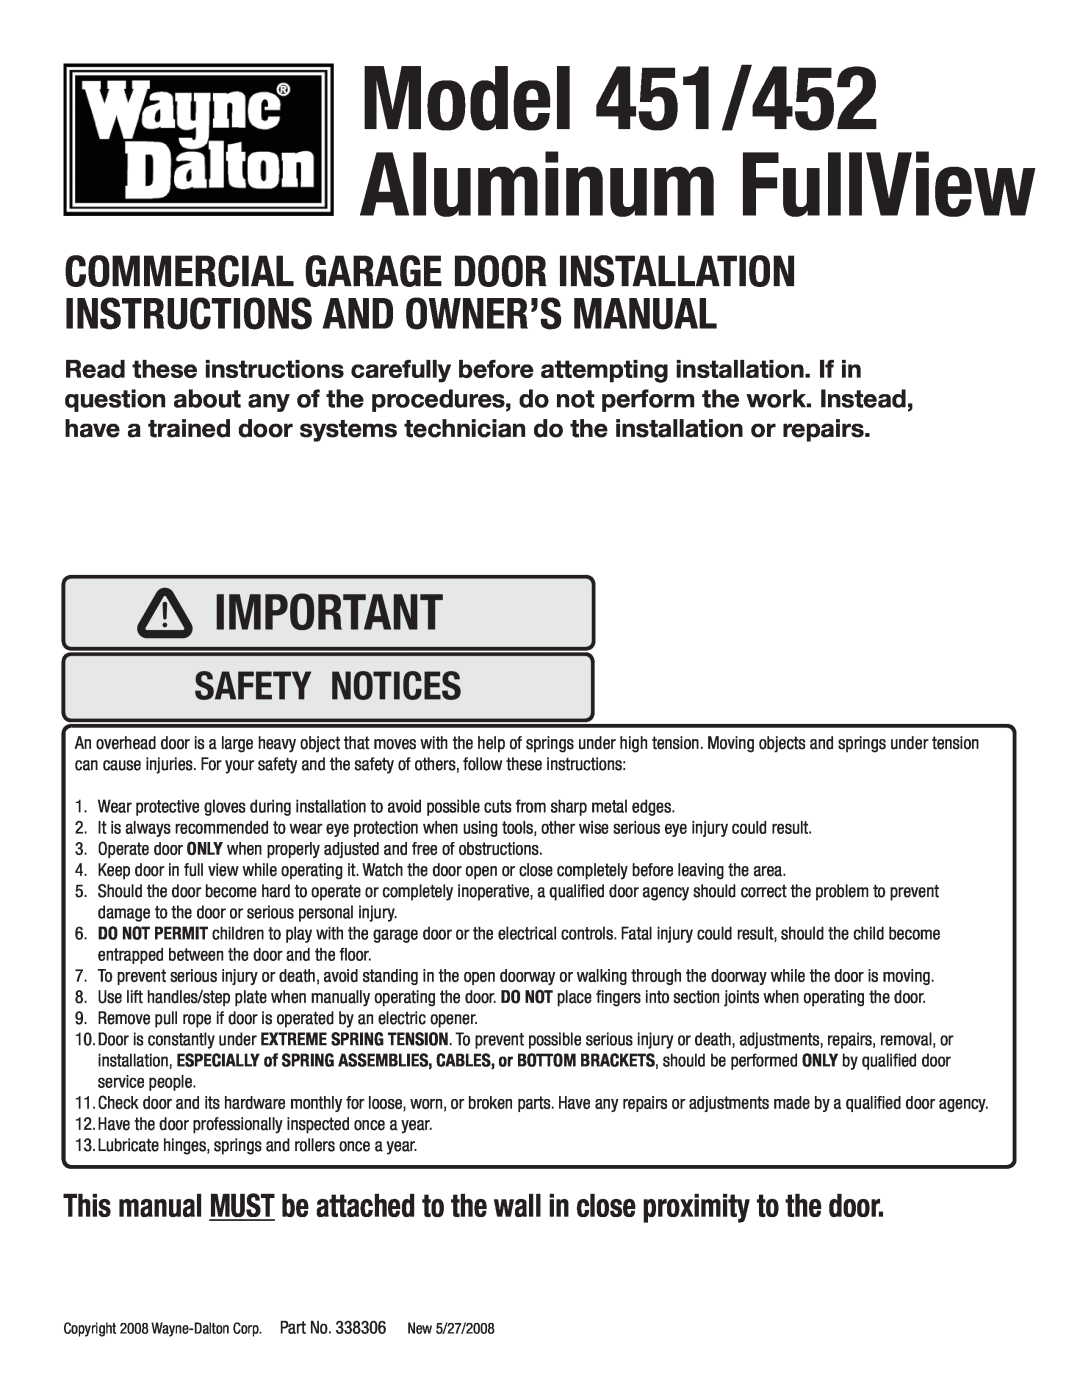 Wayne-Dalton installation instructions Model 451/452 Aluminum FullView, Safety Notices 